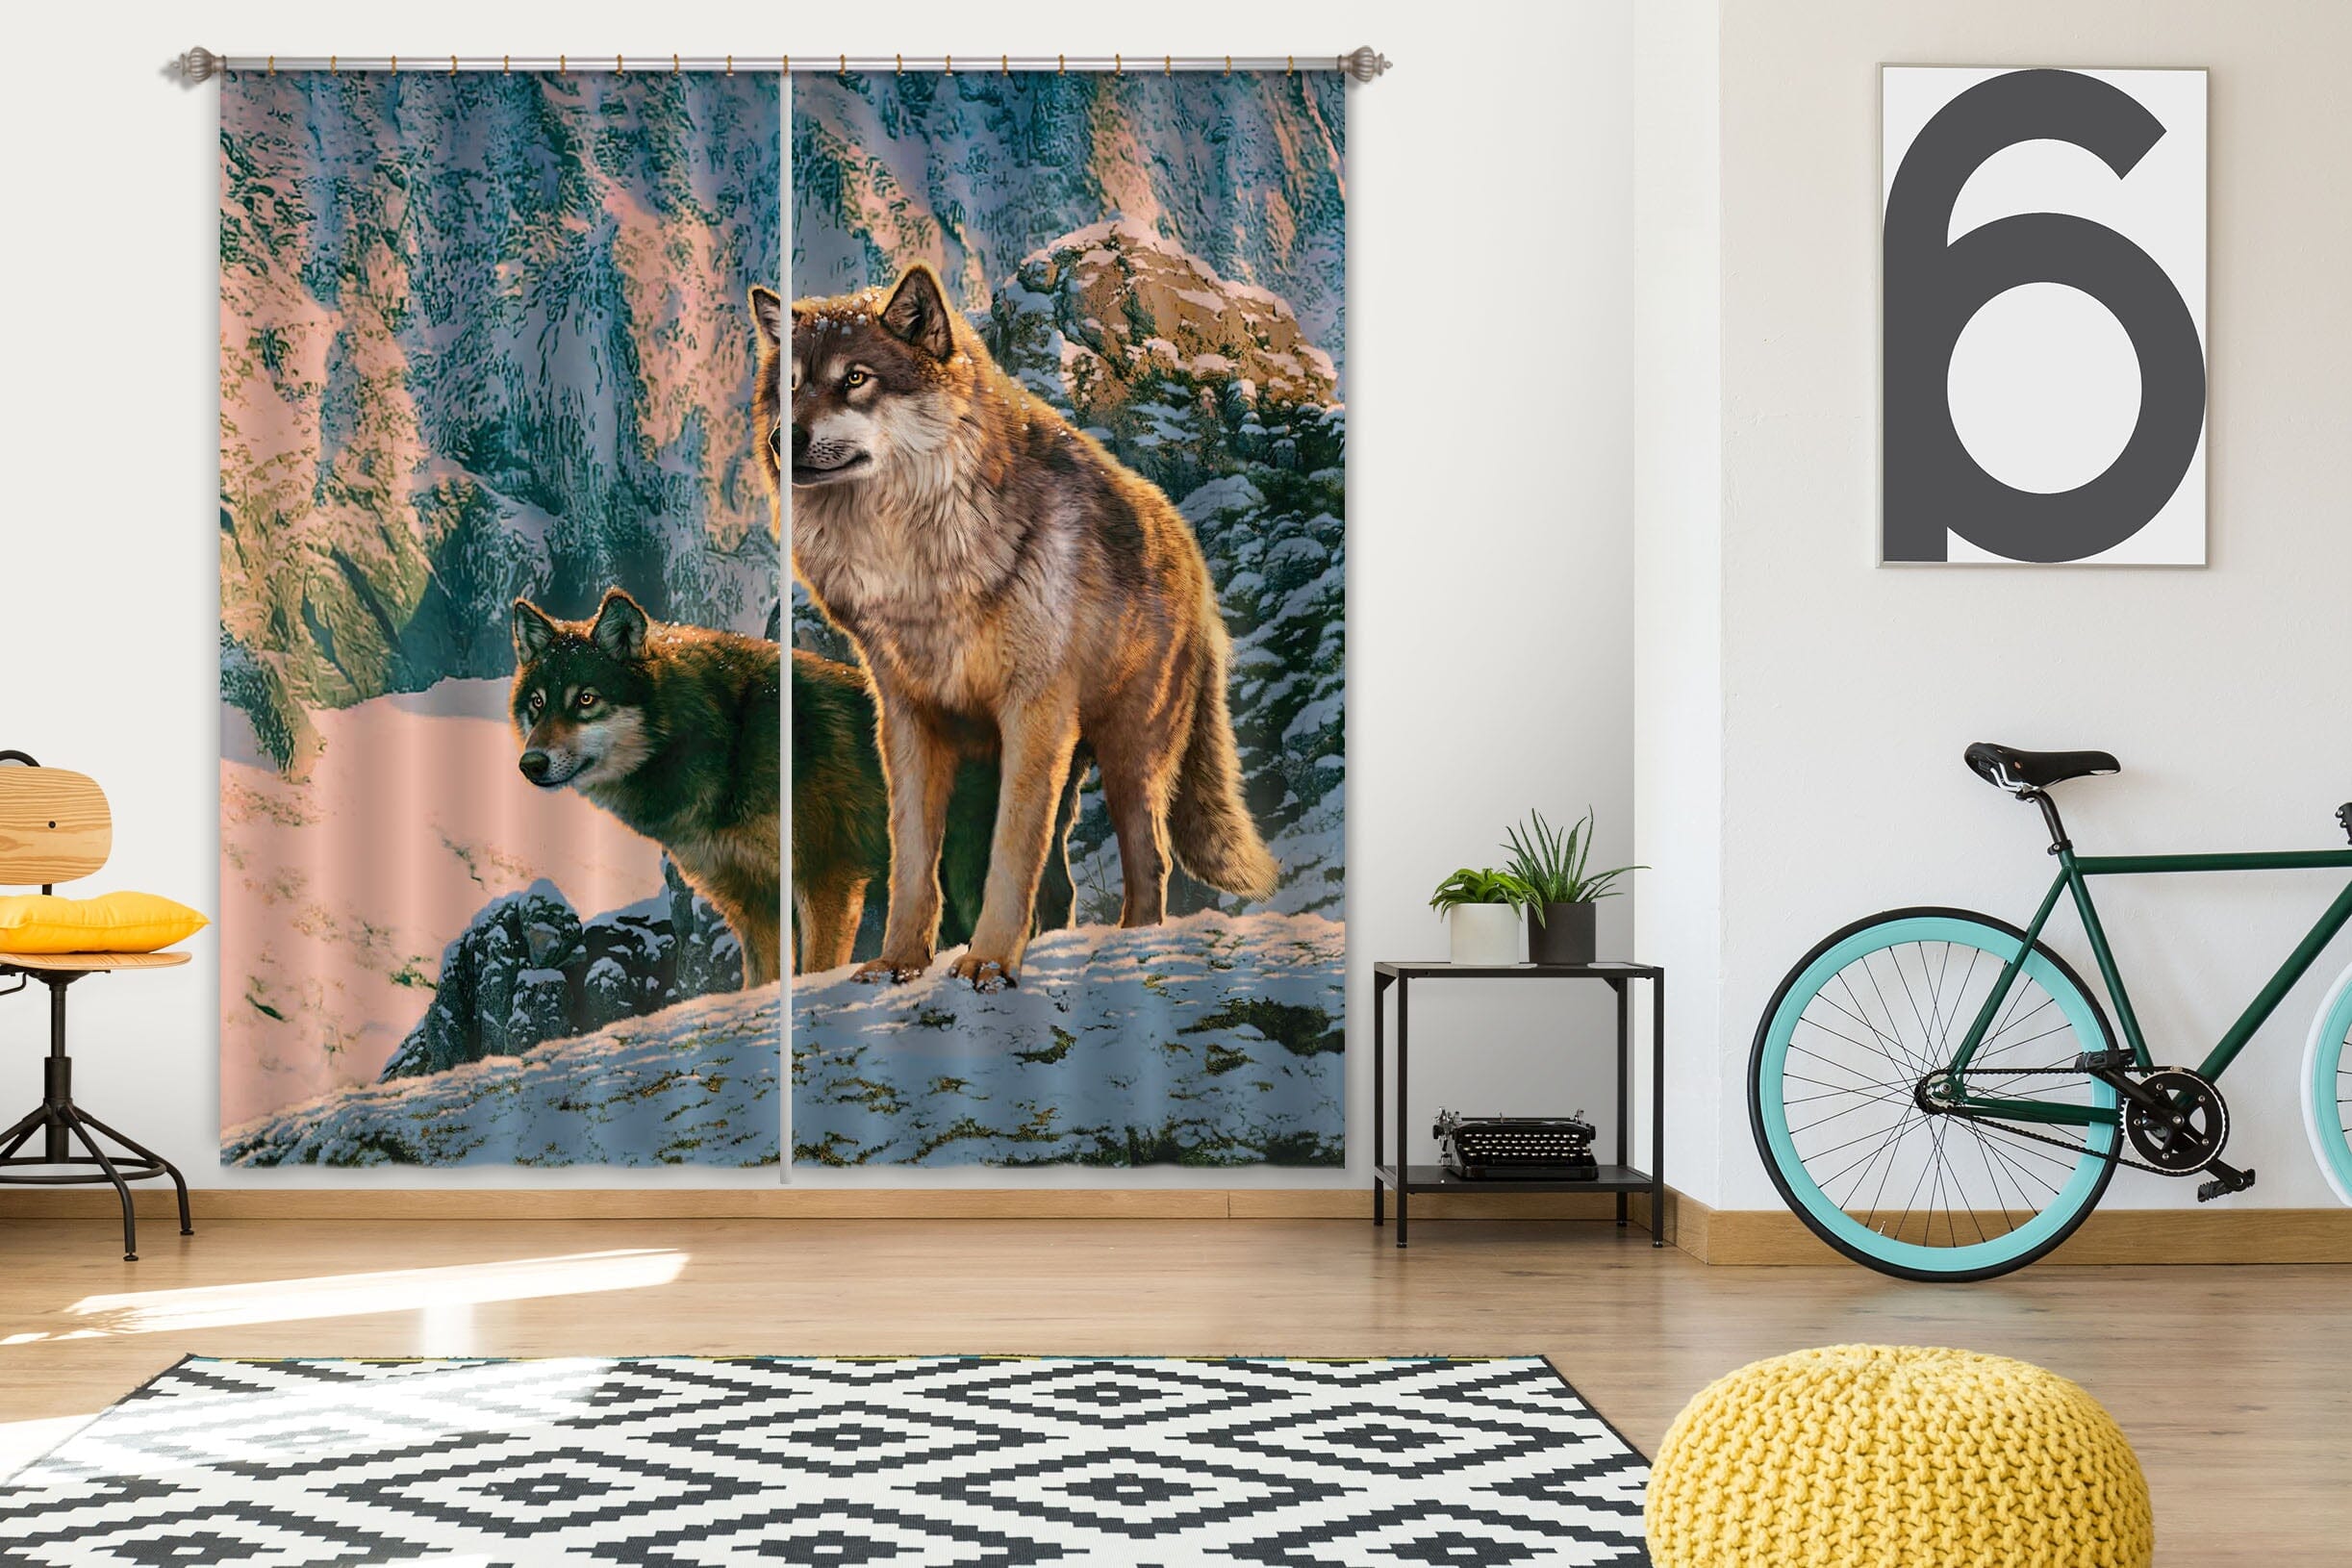 3D Wolf 094 Vincent Hie Curtain Curtains Drapes Curtains AJ Creativity Home 